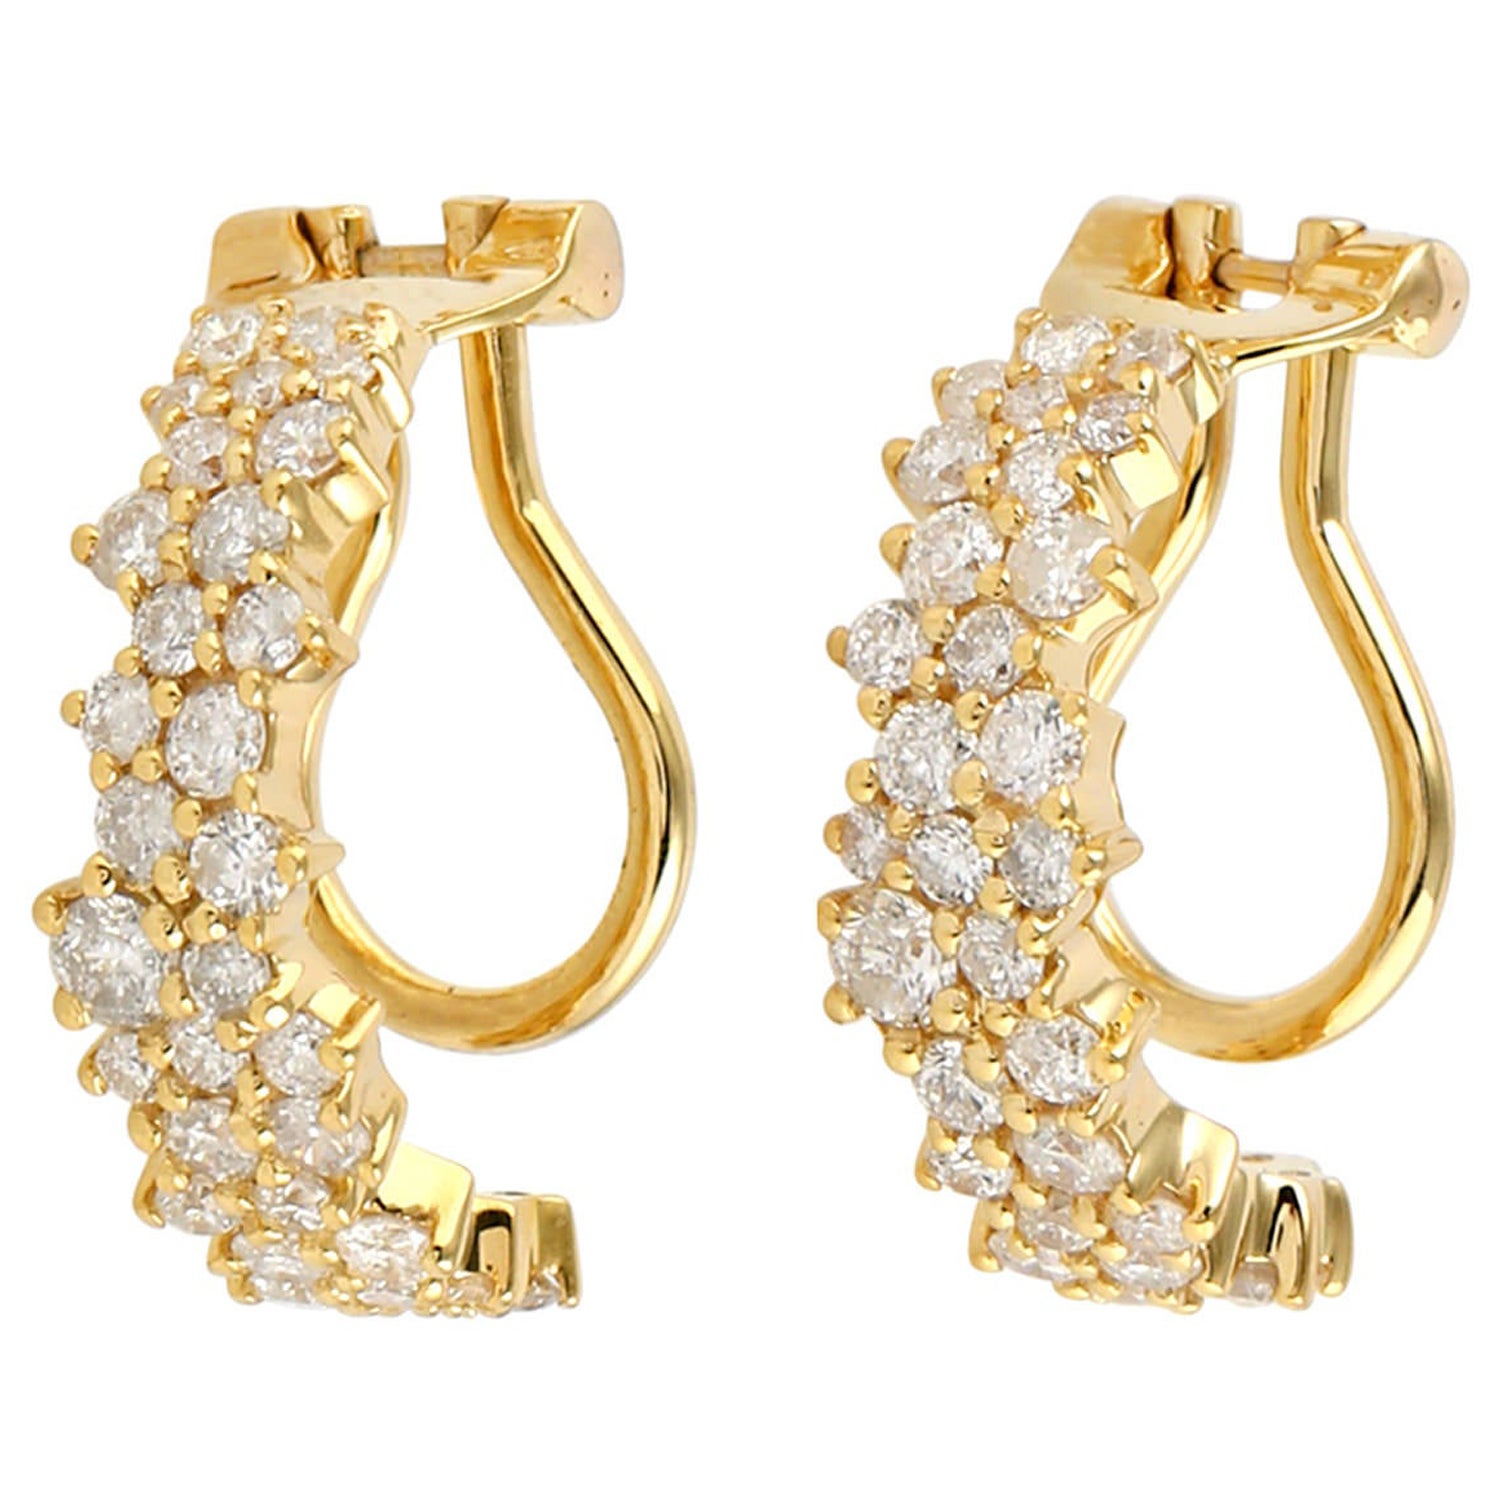 Boucles d'oreilles en or 14 carats avec 1,28 carats de diamant